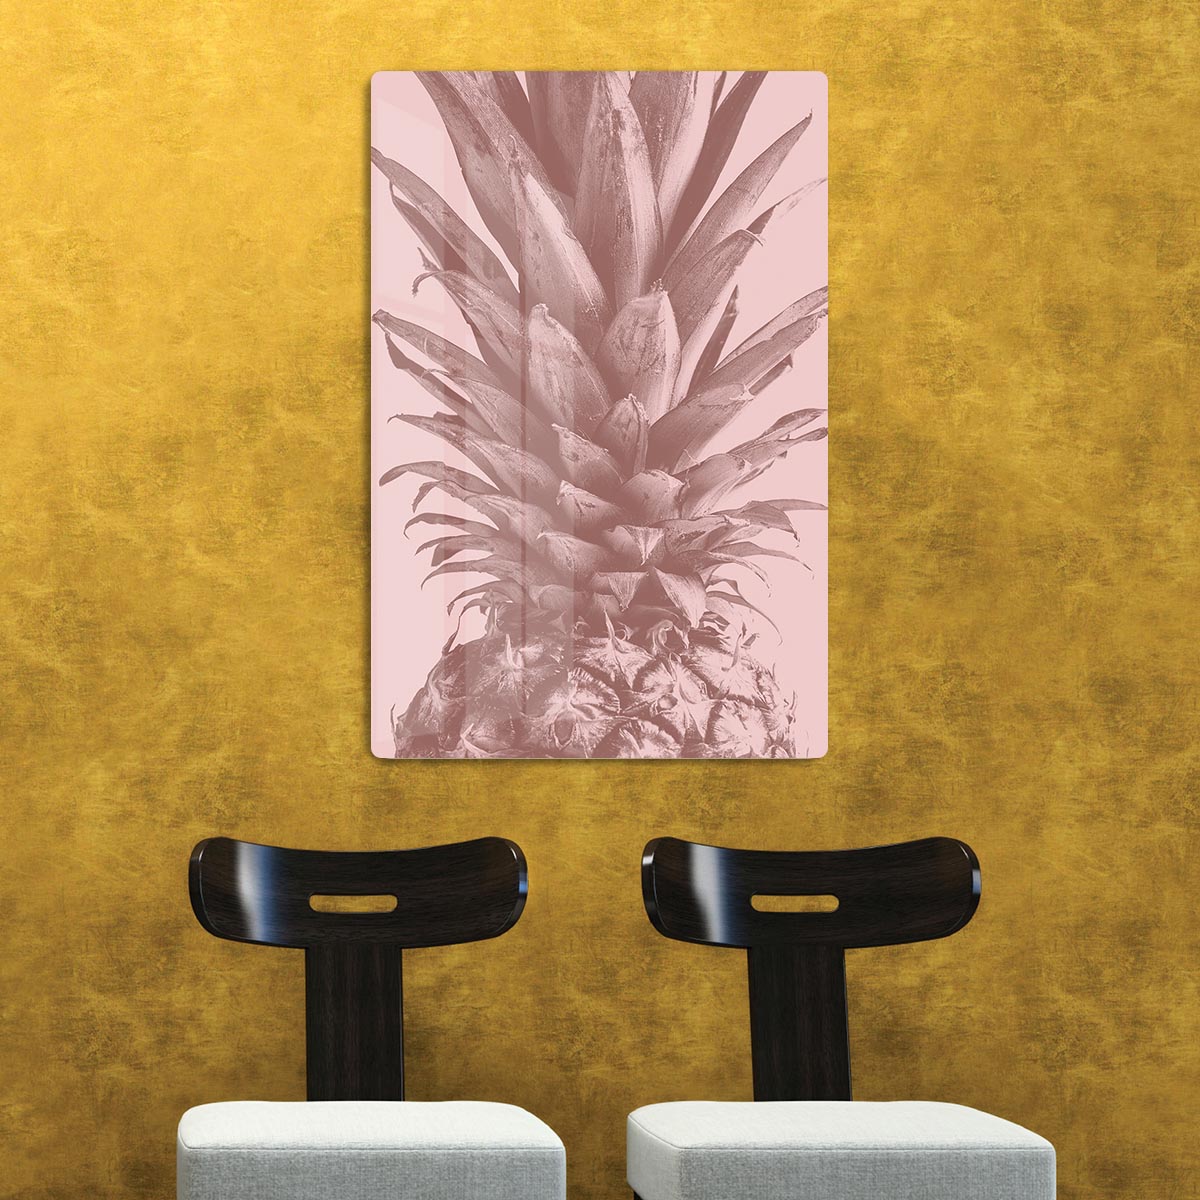 Pineapple Close Up 01 HD Metal Print - Canvas Art Rocks - 2